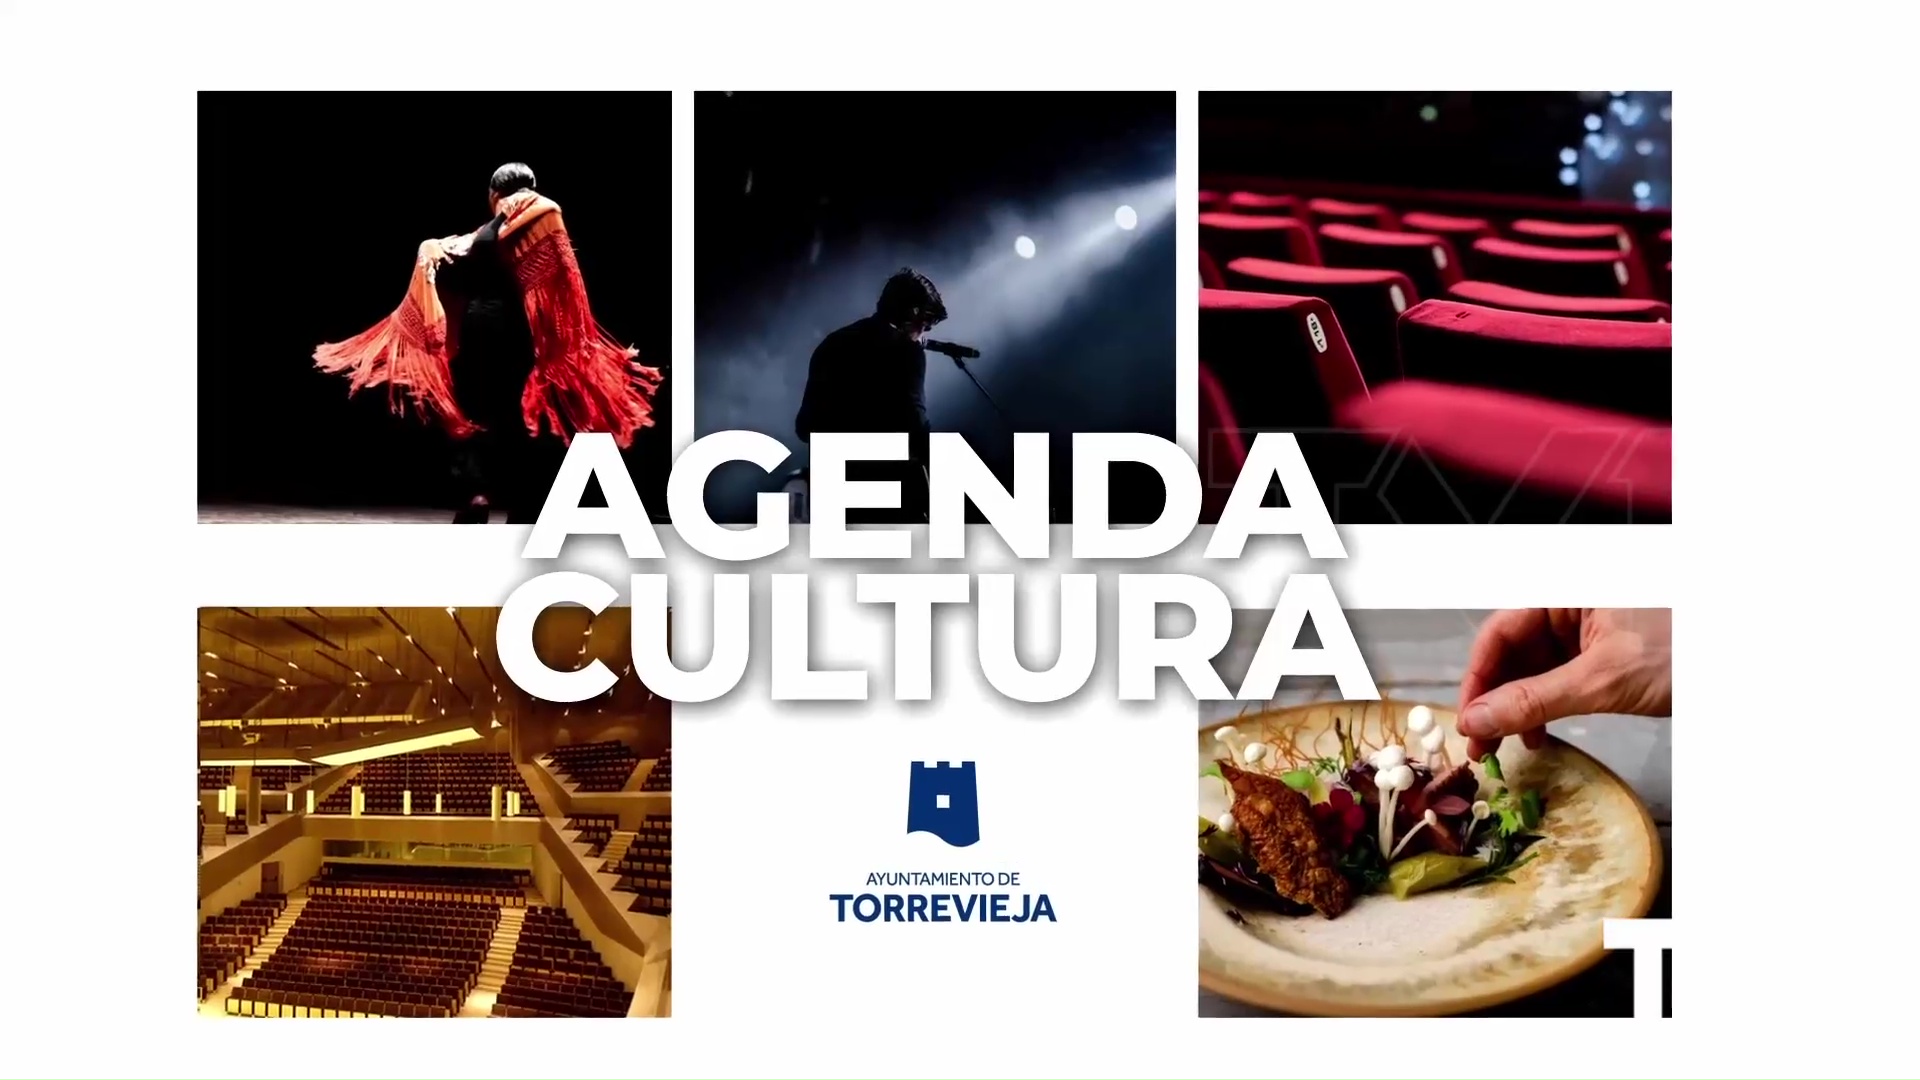 Imagen de Agenda cultural recomendada por el Instituto Municipal de Cultura